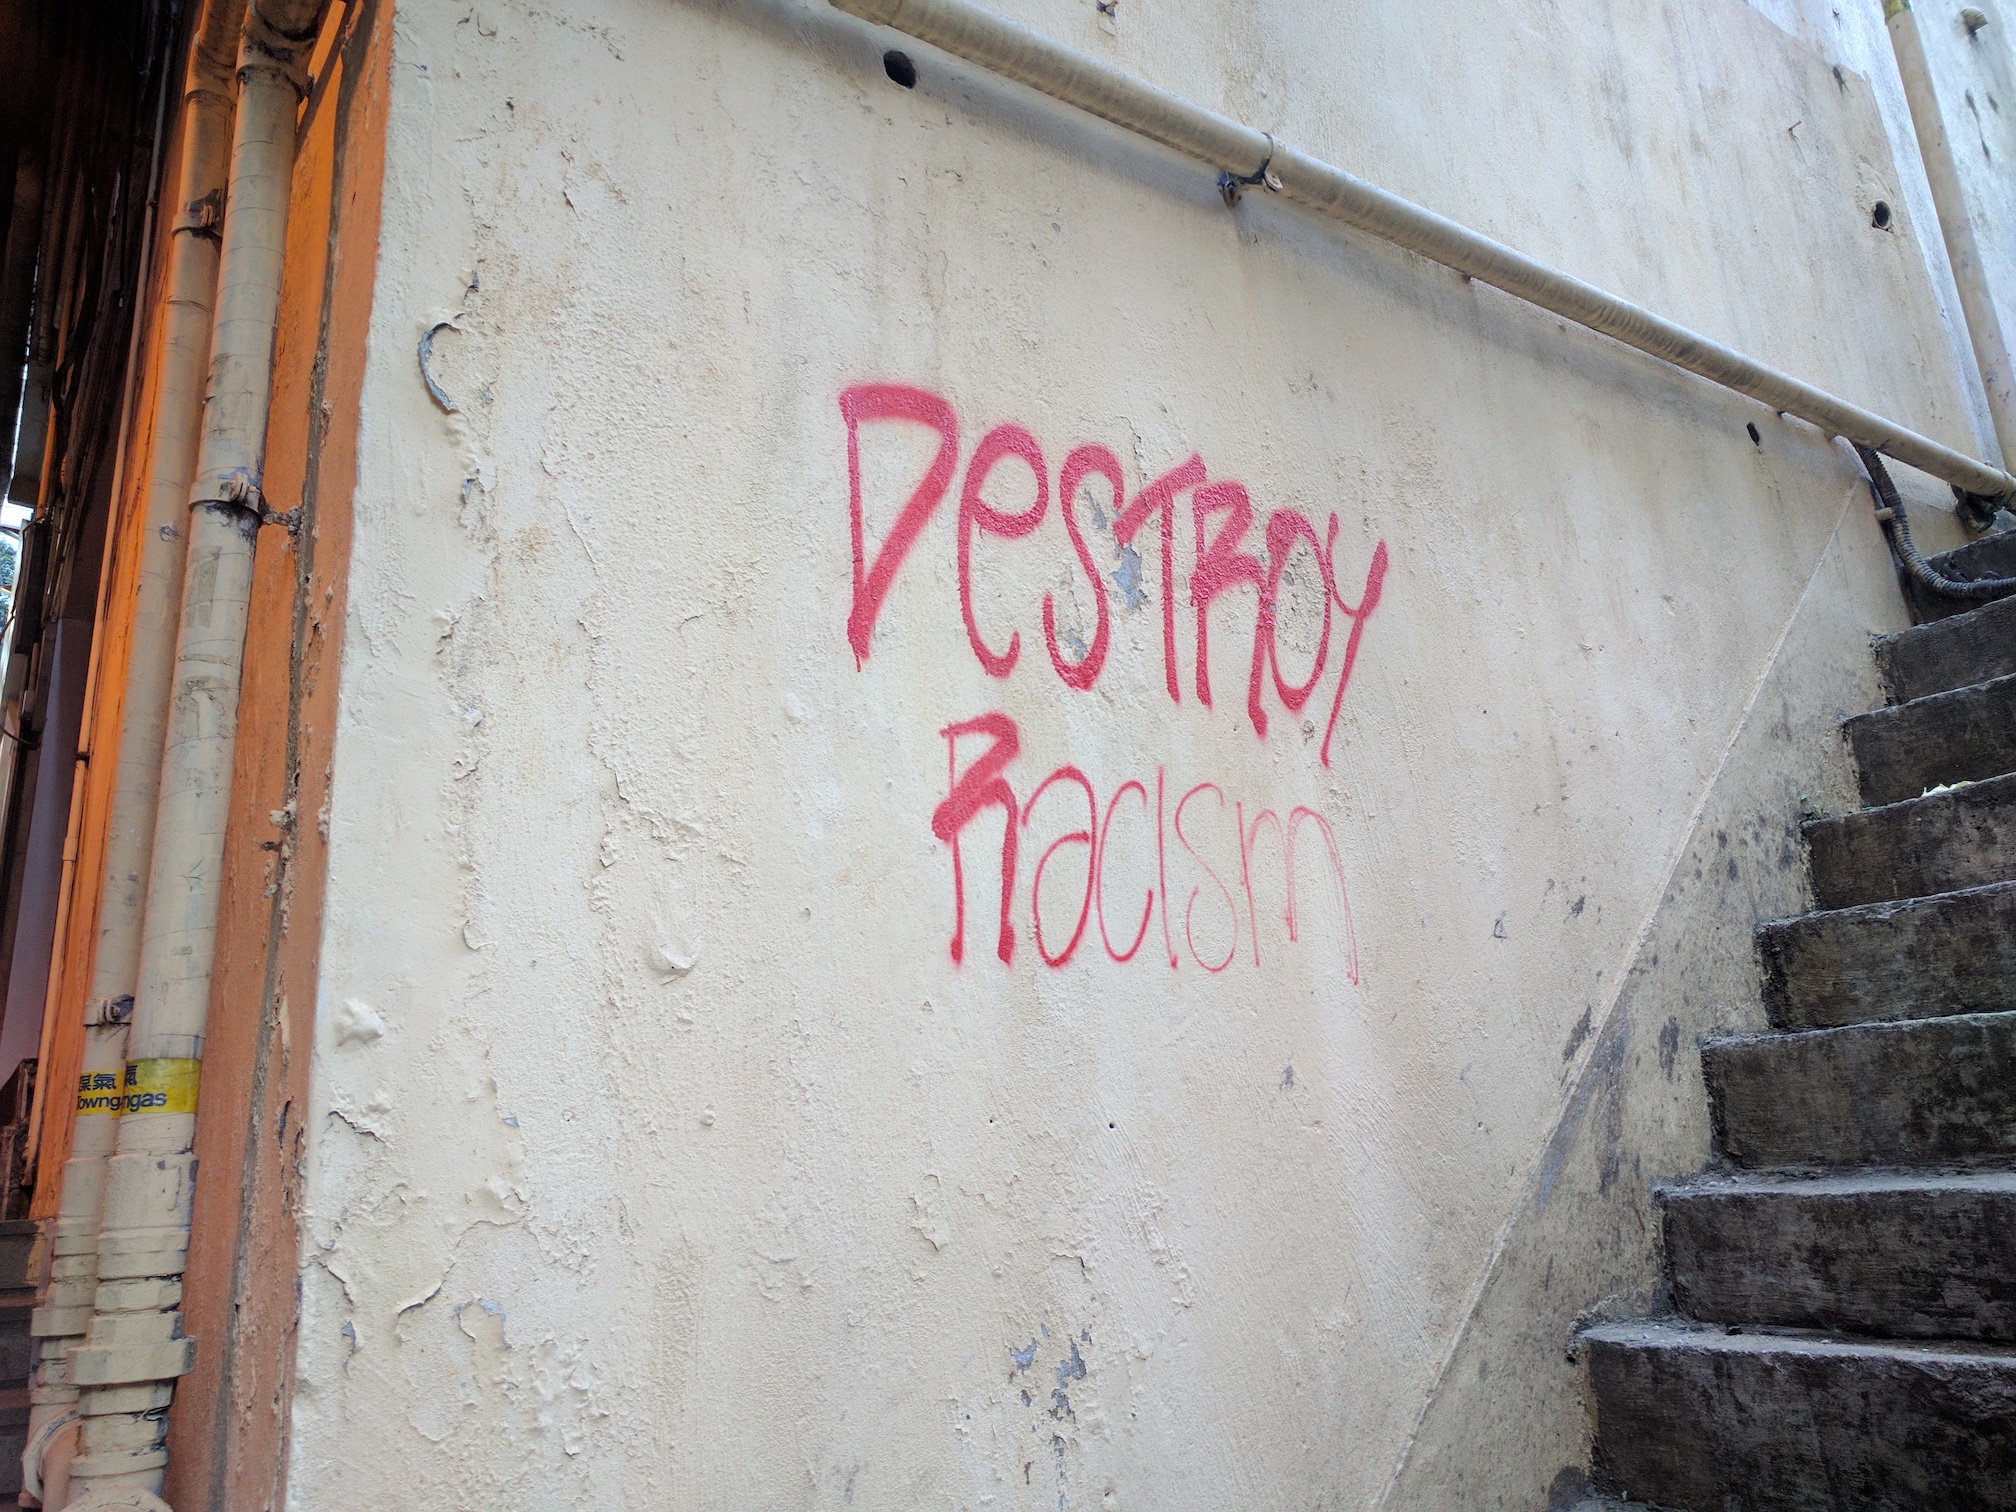 We found Positive Graffiti